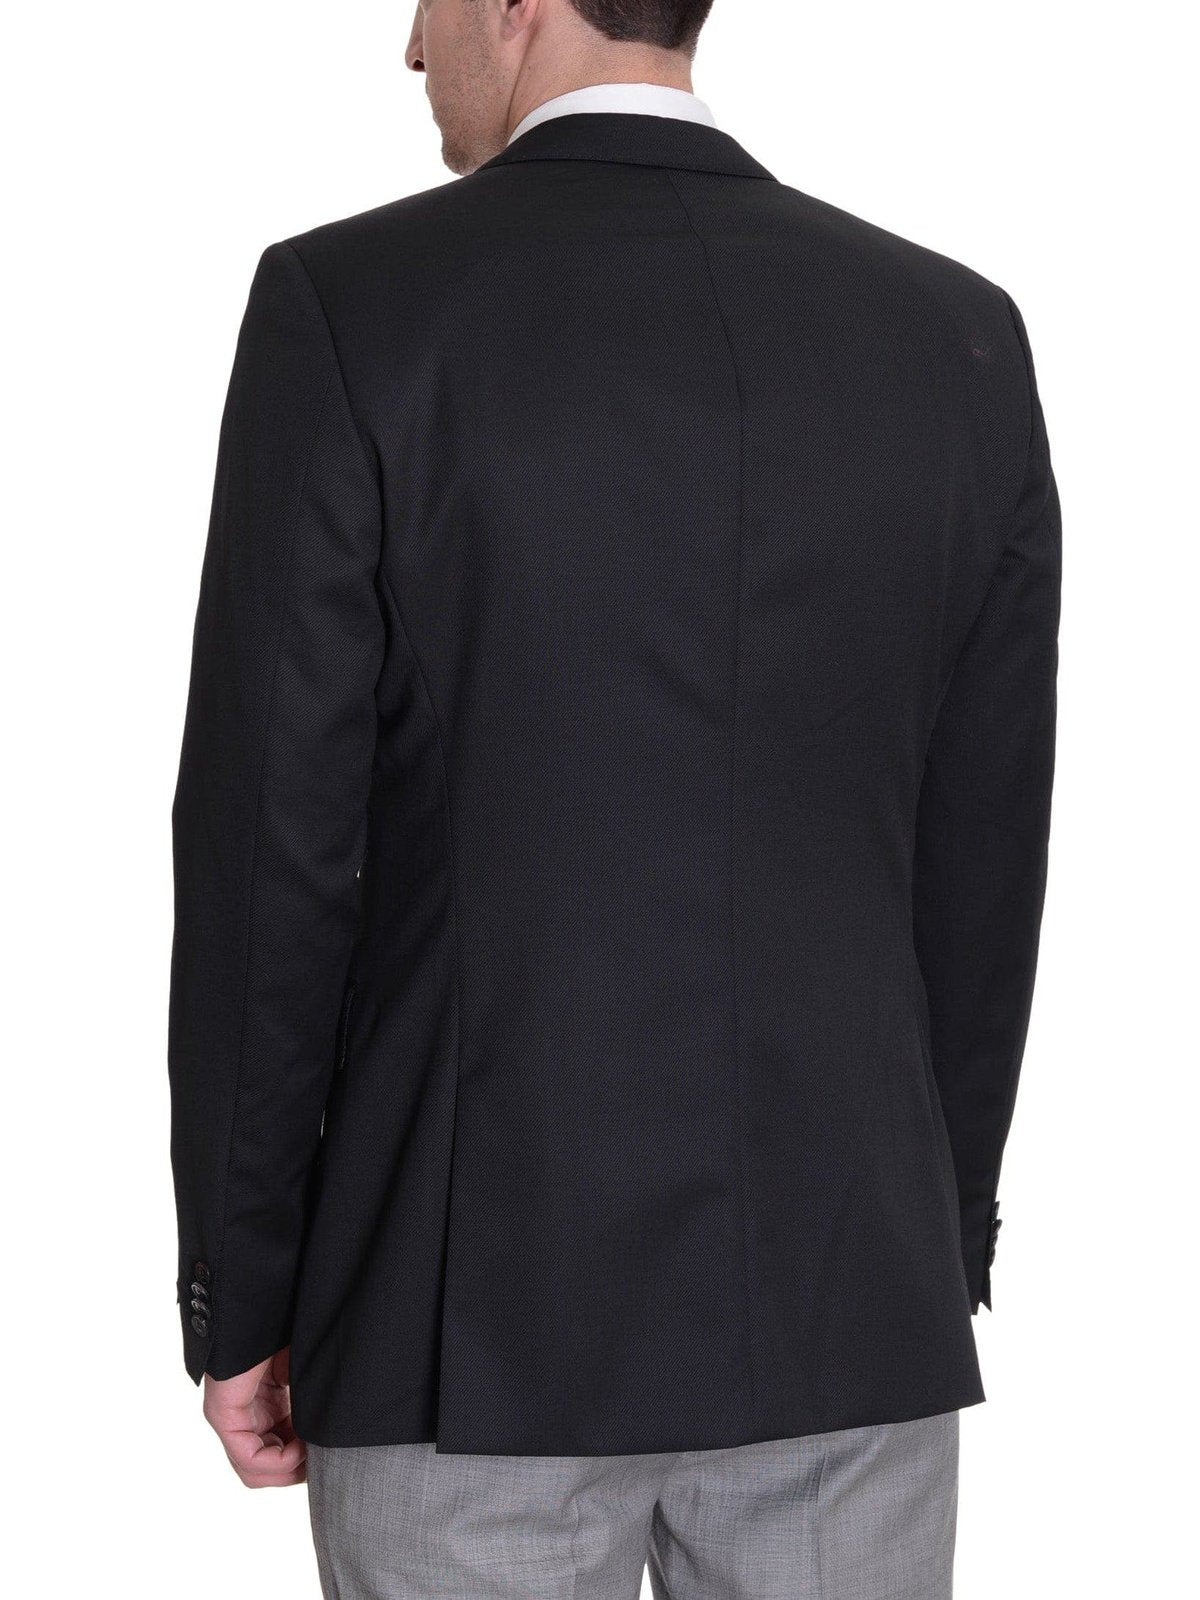 HUGO BOSS BLAZERS Hugo Boss The James2 Slim Fit Semi-Solid Black Two Button Wool Blazer Sportcoat